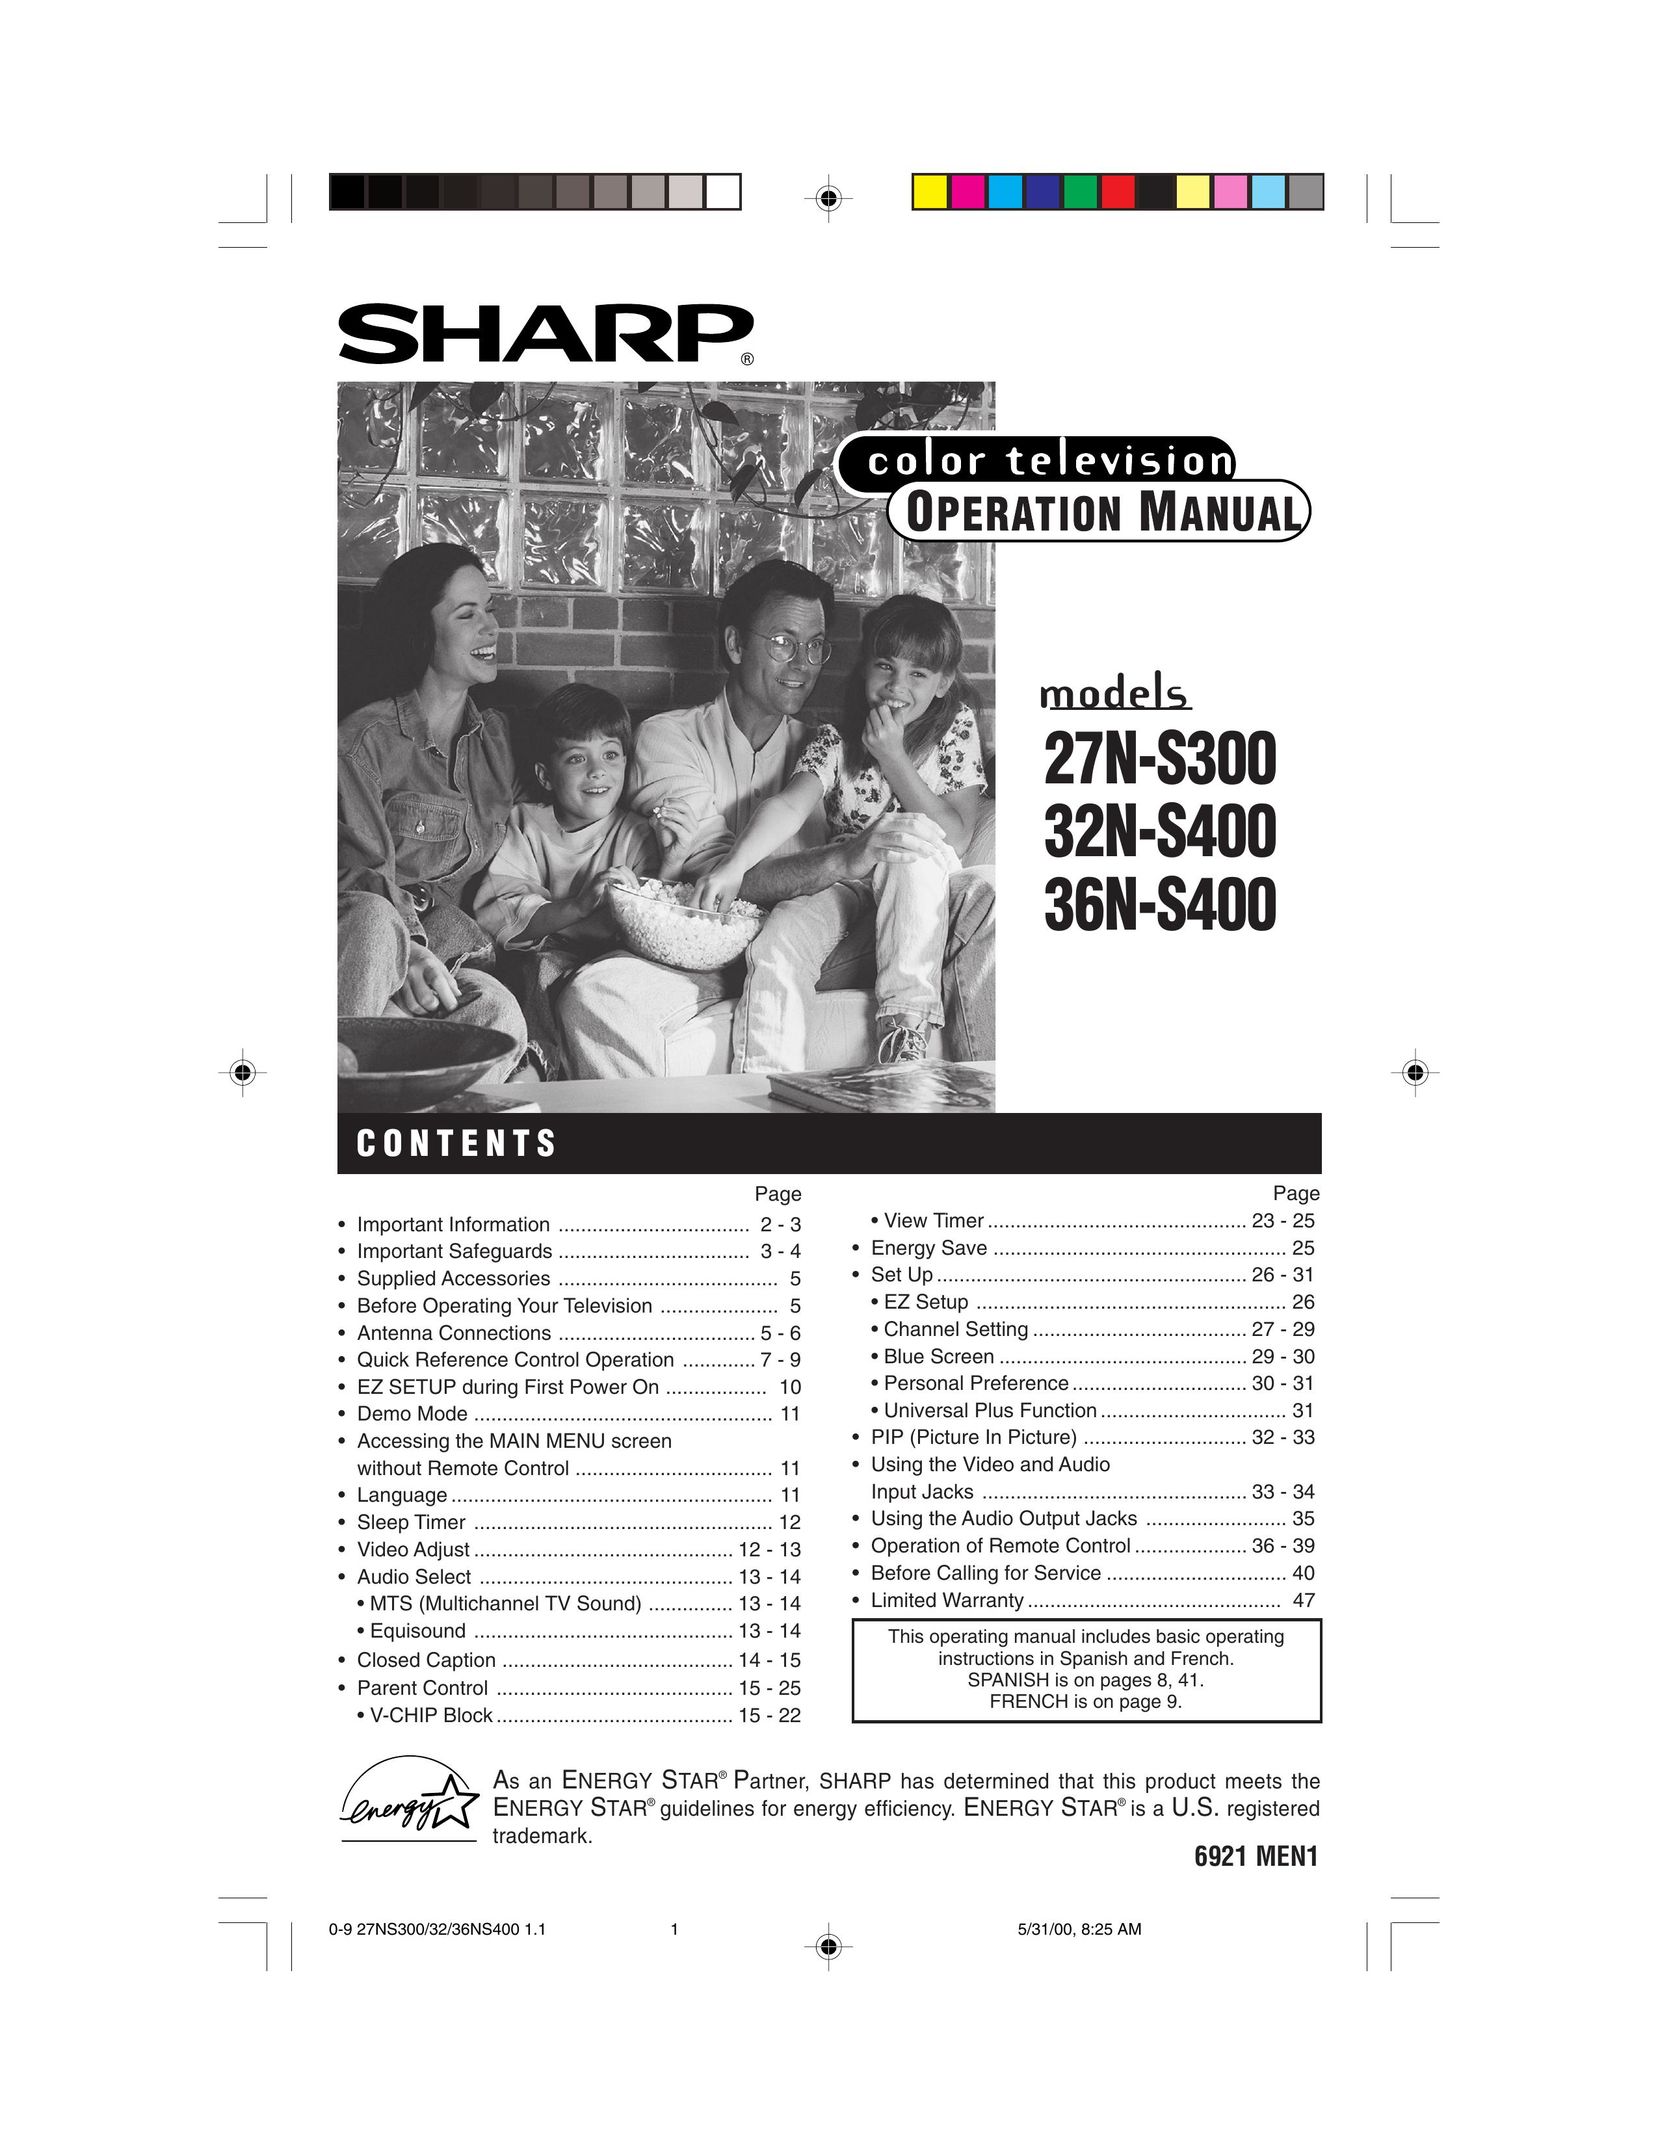 Sharp 27N S300 CRT Television User Manual